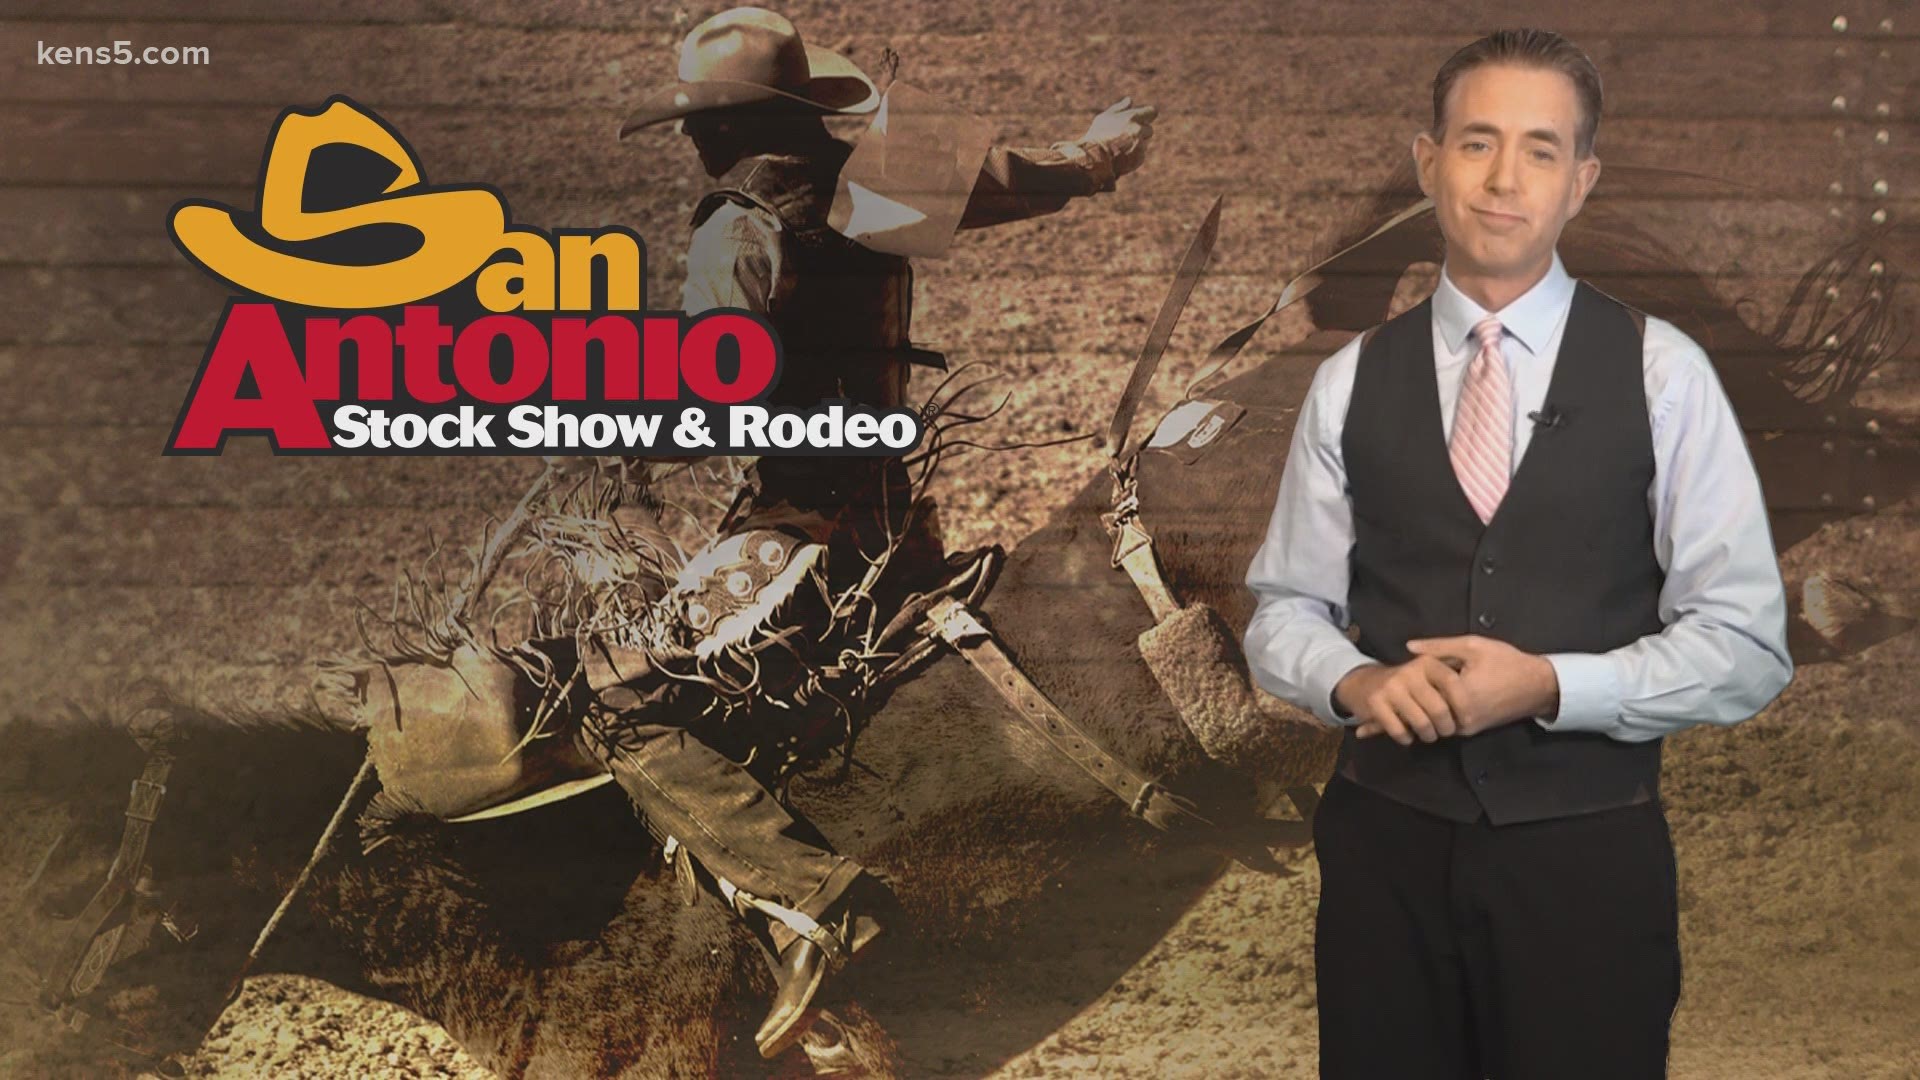 Let's rodeo San Antonio! Next year's San Antonio Stock Show and Rodeo is on, despite the coronavirus pandemic.